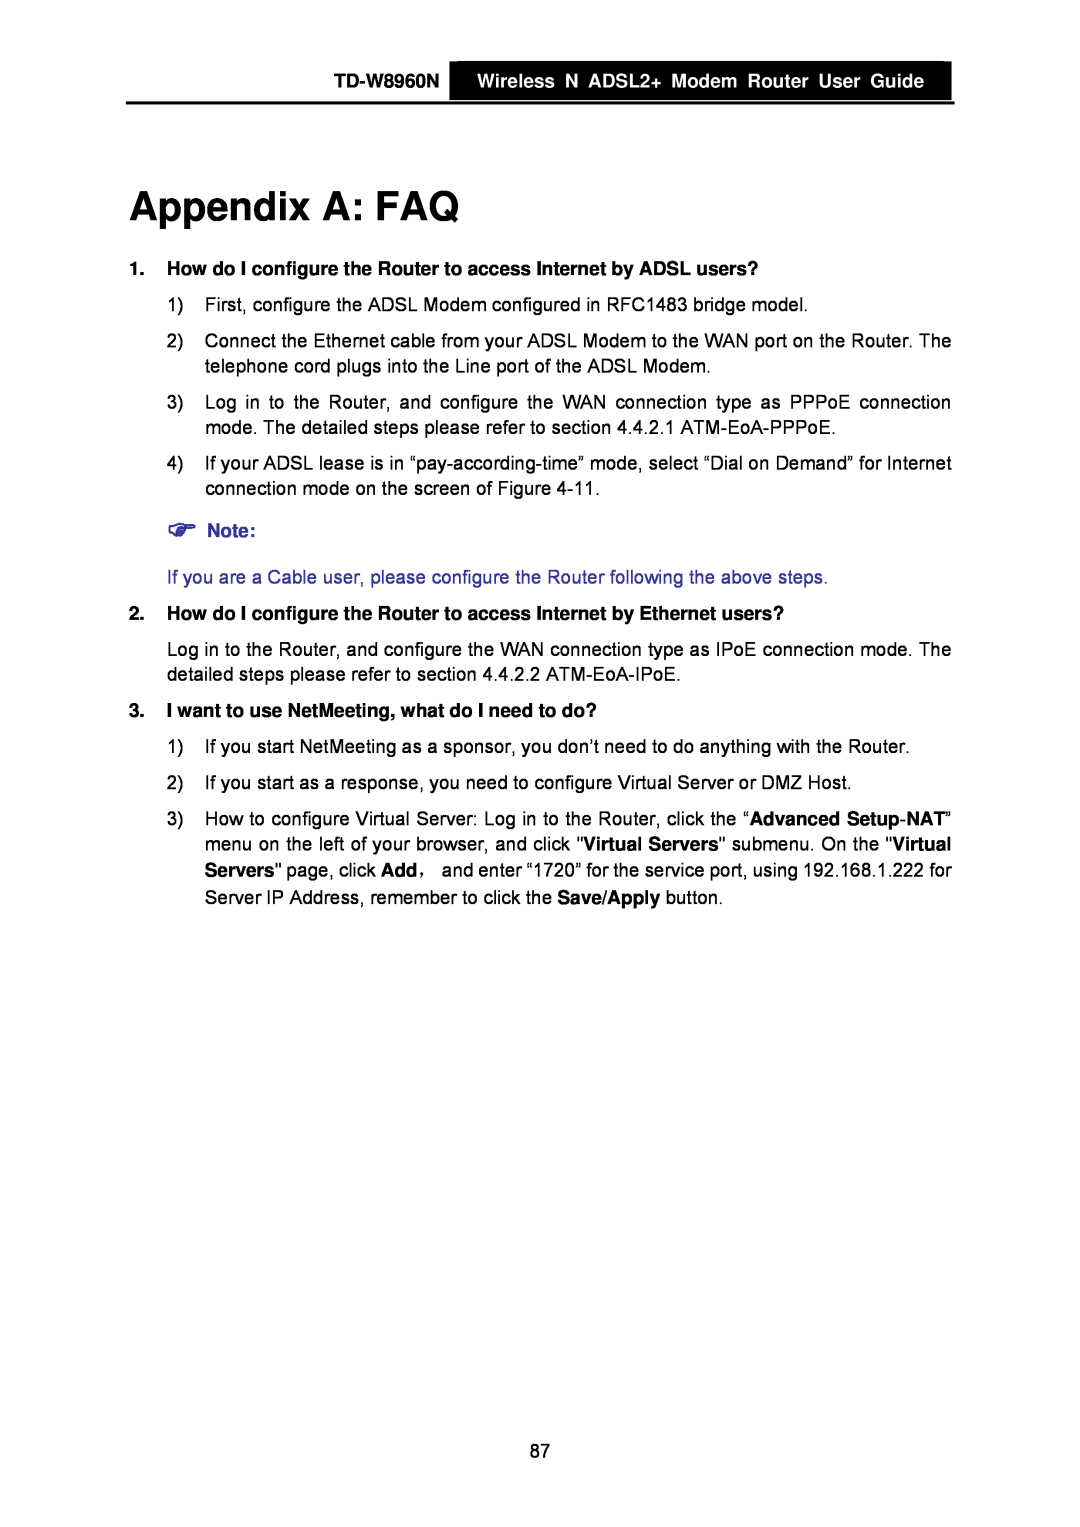 TP-Link manual Appendix A FAQ, TD-W8960N Wireless N ADSL2+ Modem Router User Guide 